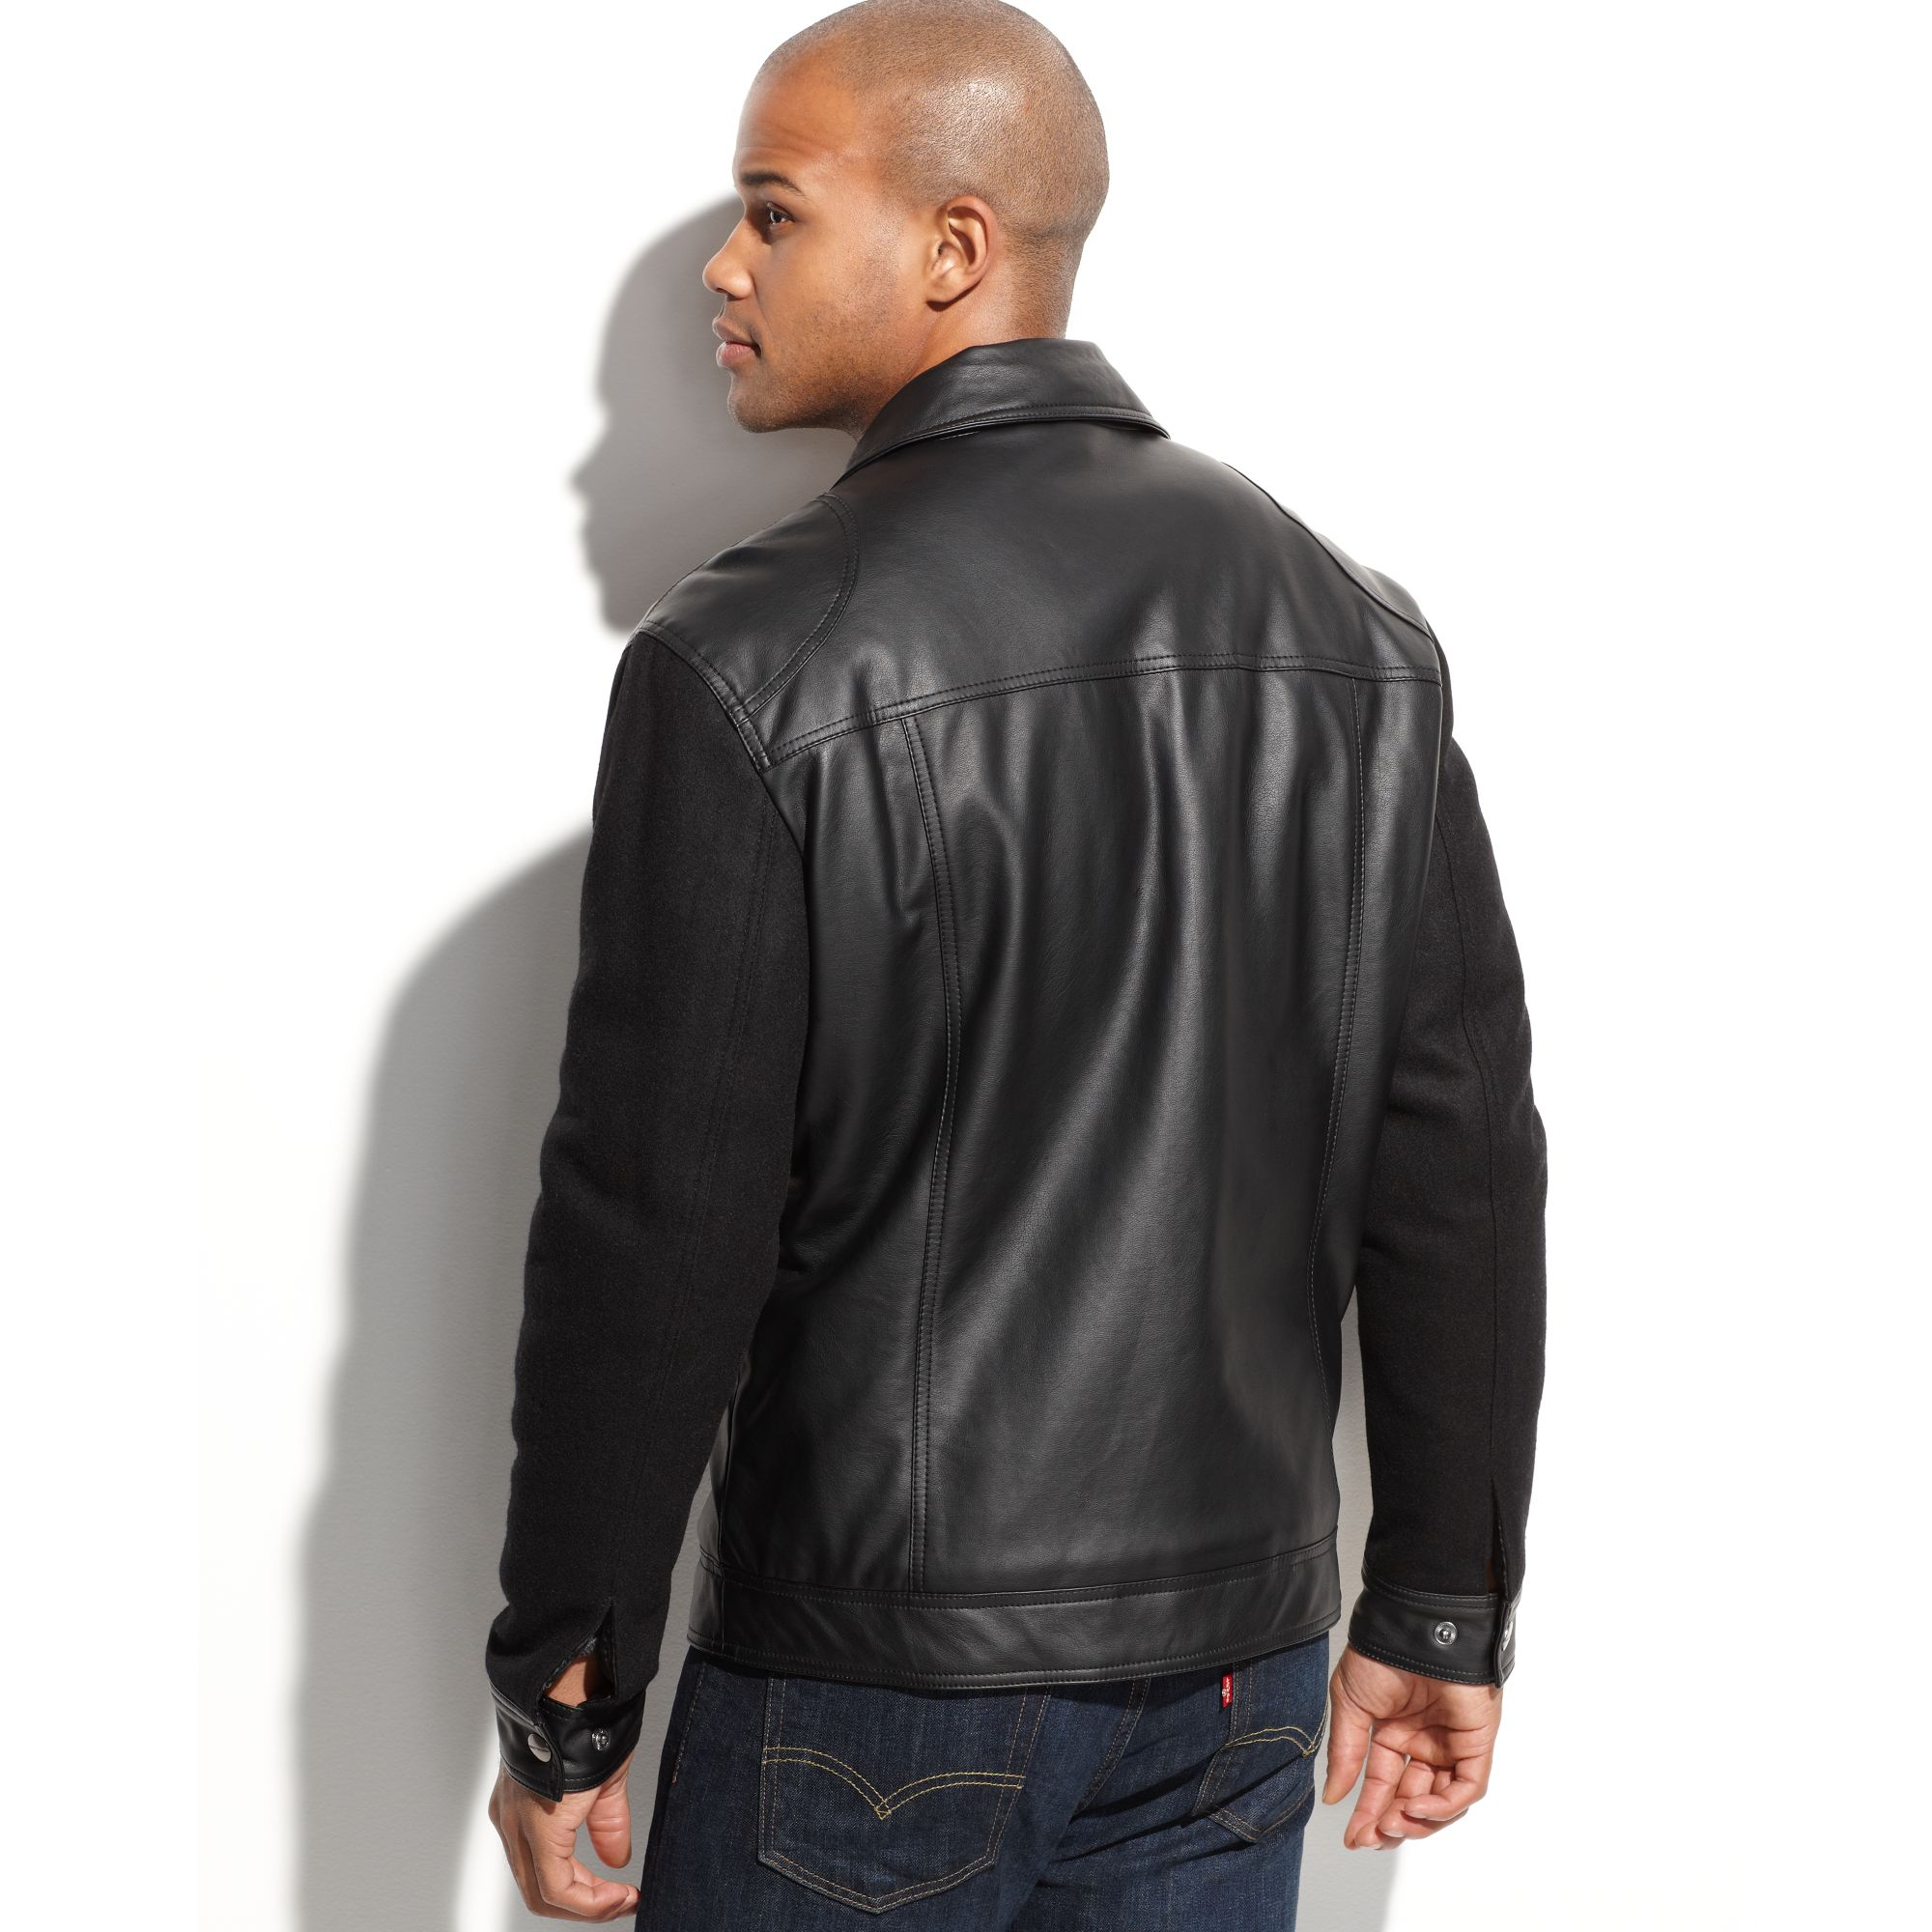 Lyst - Michael kors Alpha Wool Sleeve Faux Leather Jacket in Black for Men